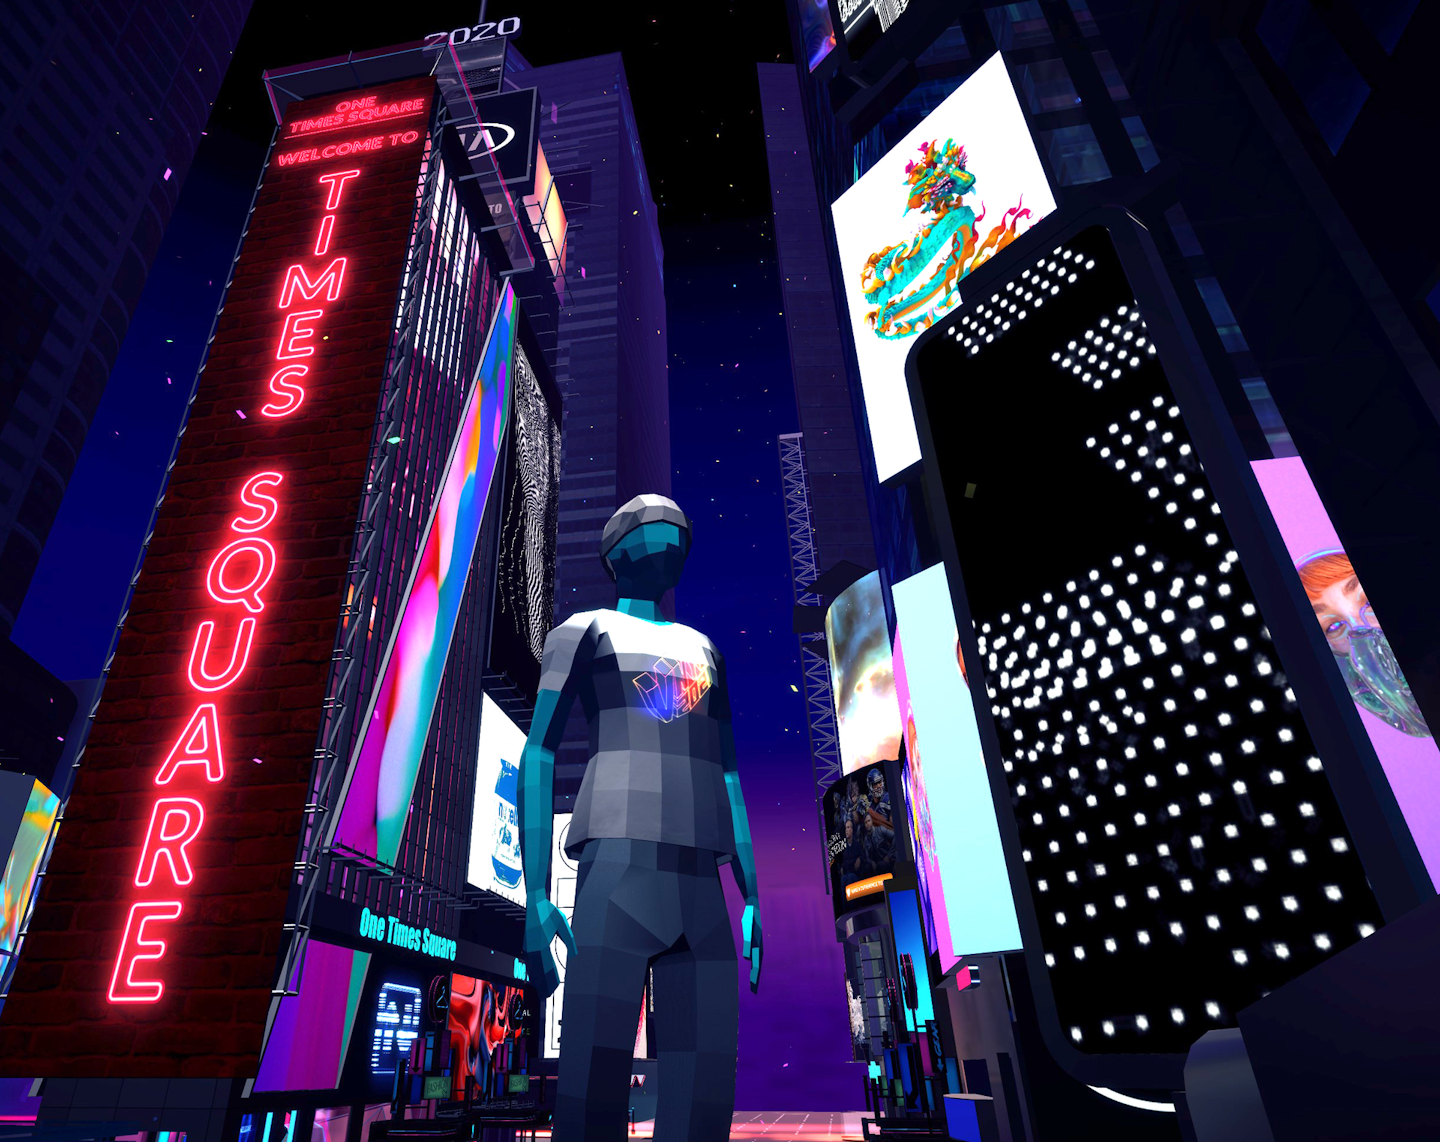 In the VNYE app, Times Square billboards were reimagined as digital art.